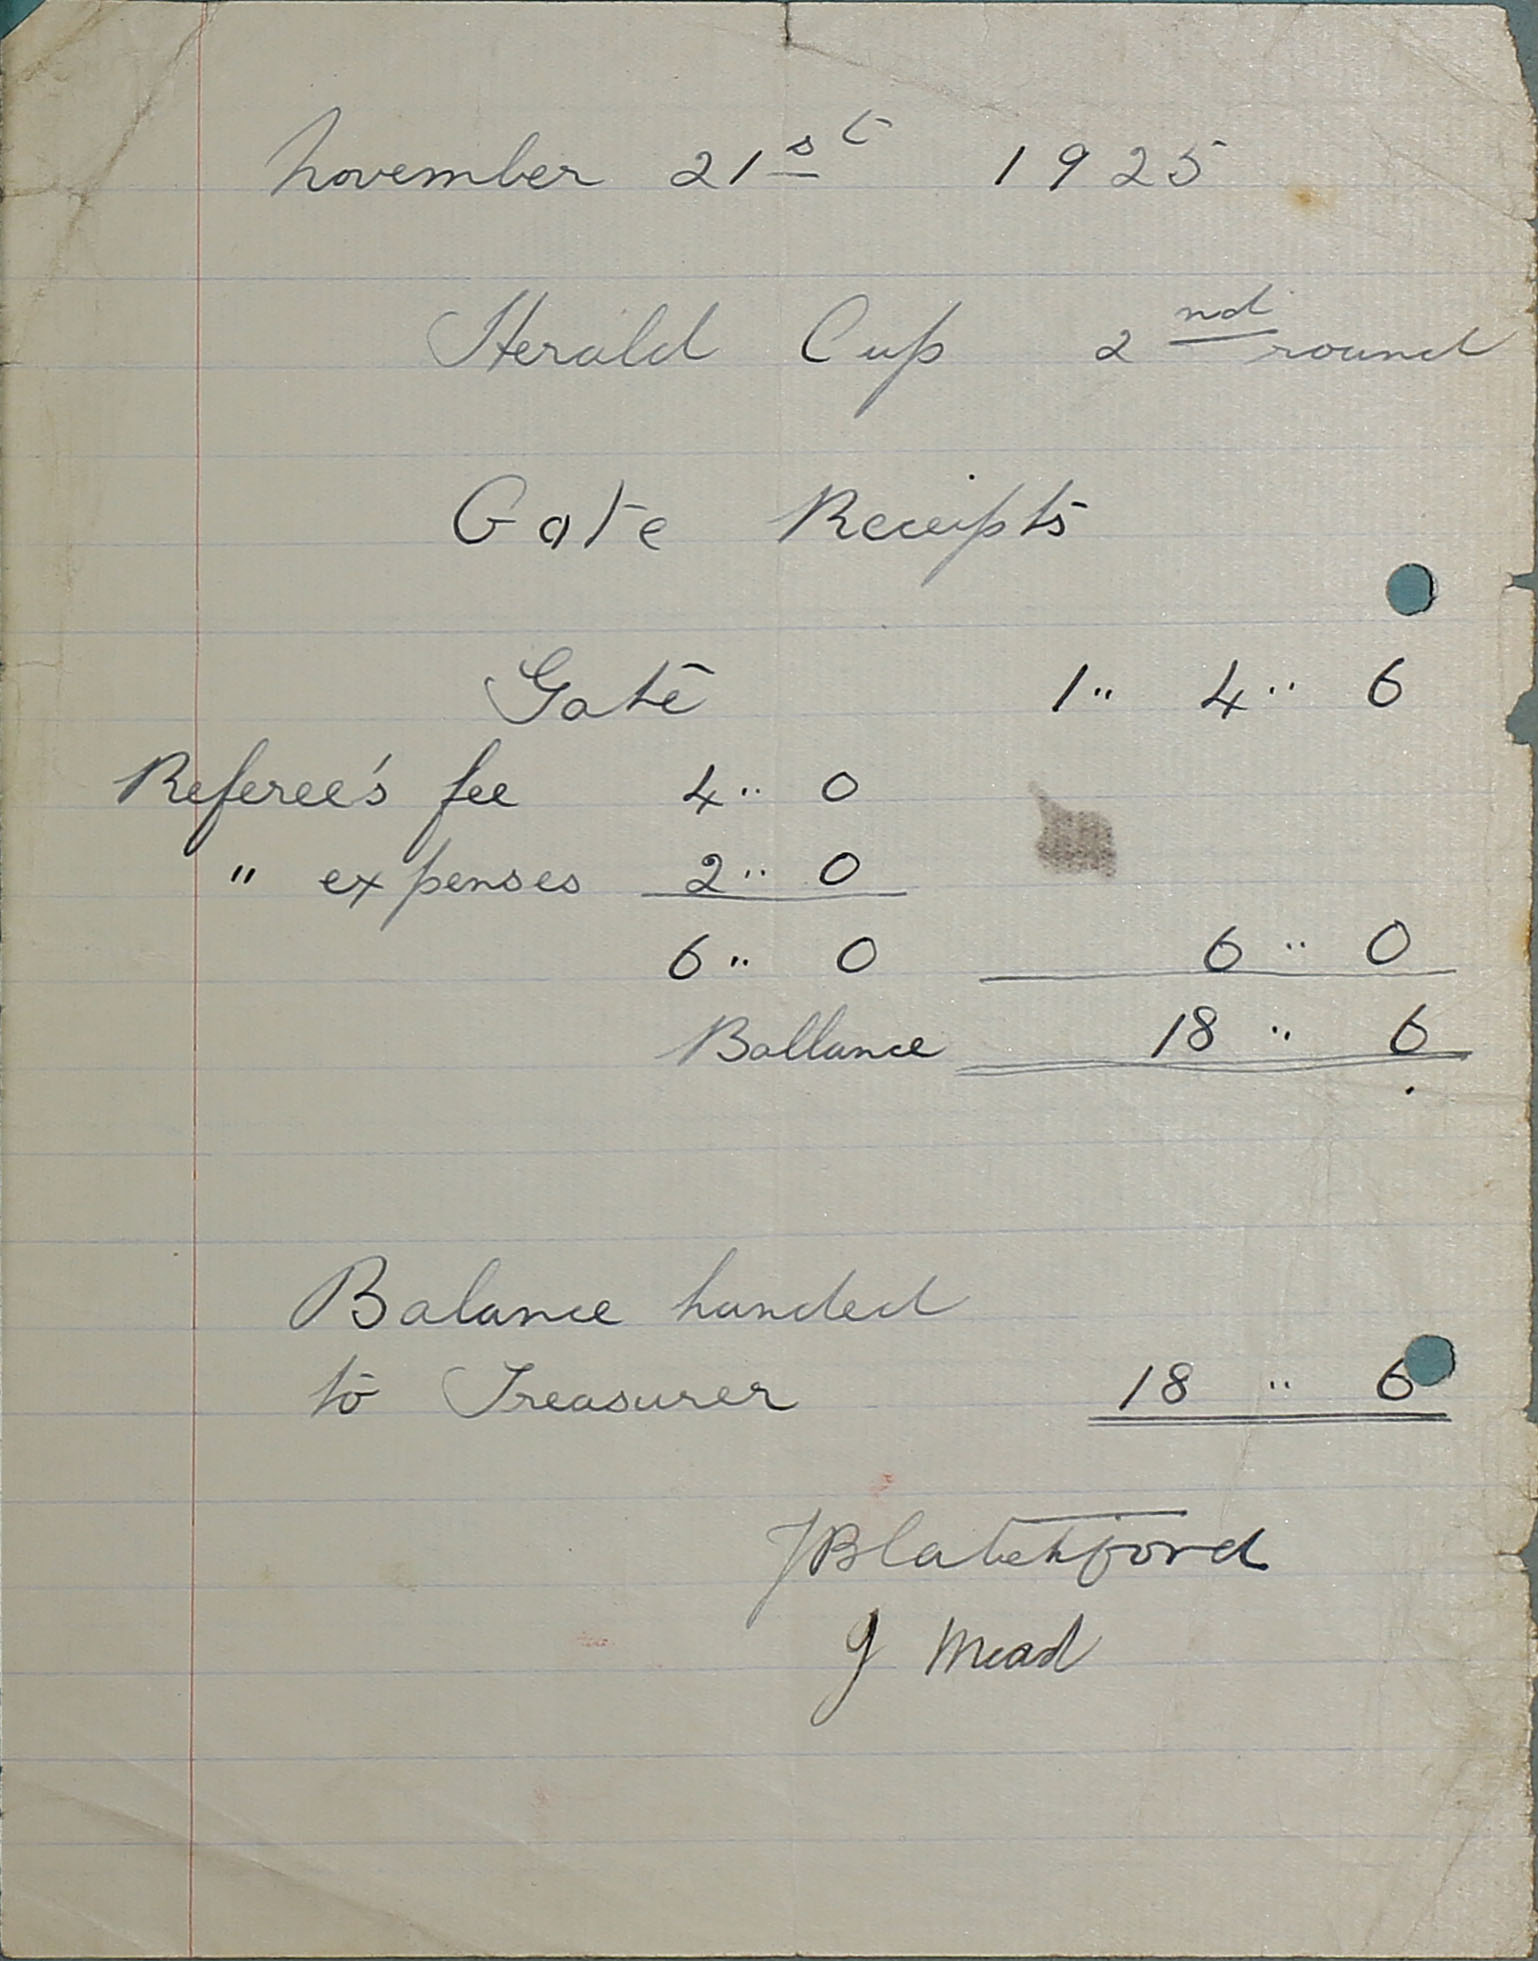 Herald Cup 2nd round Gate Receipts balance sheet, 1925.